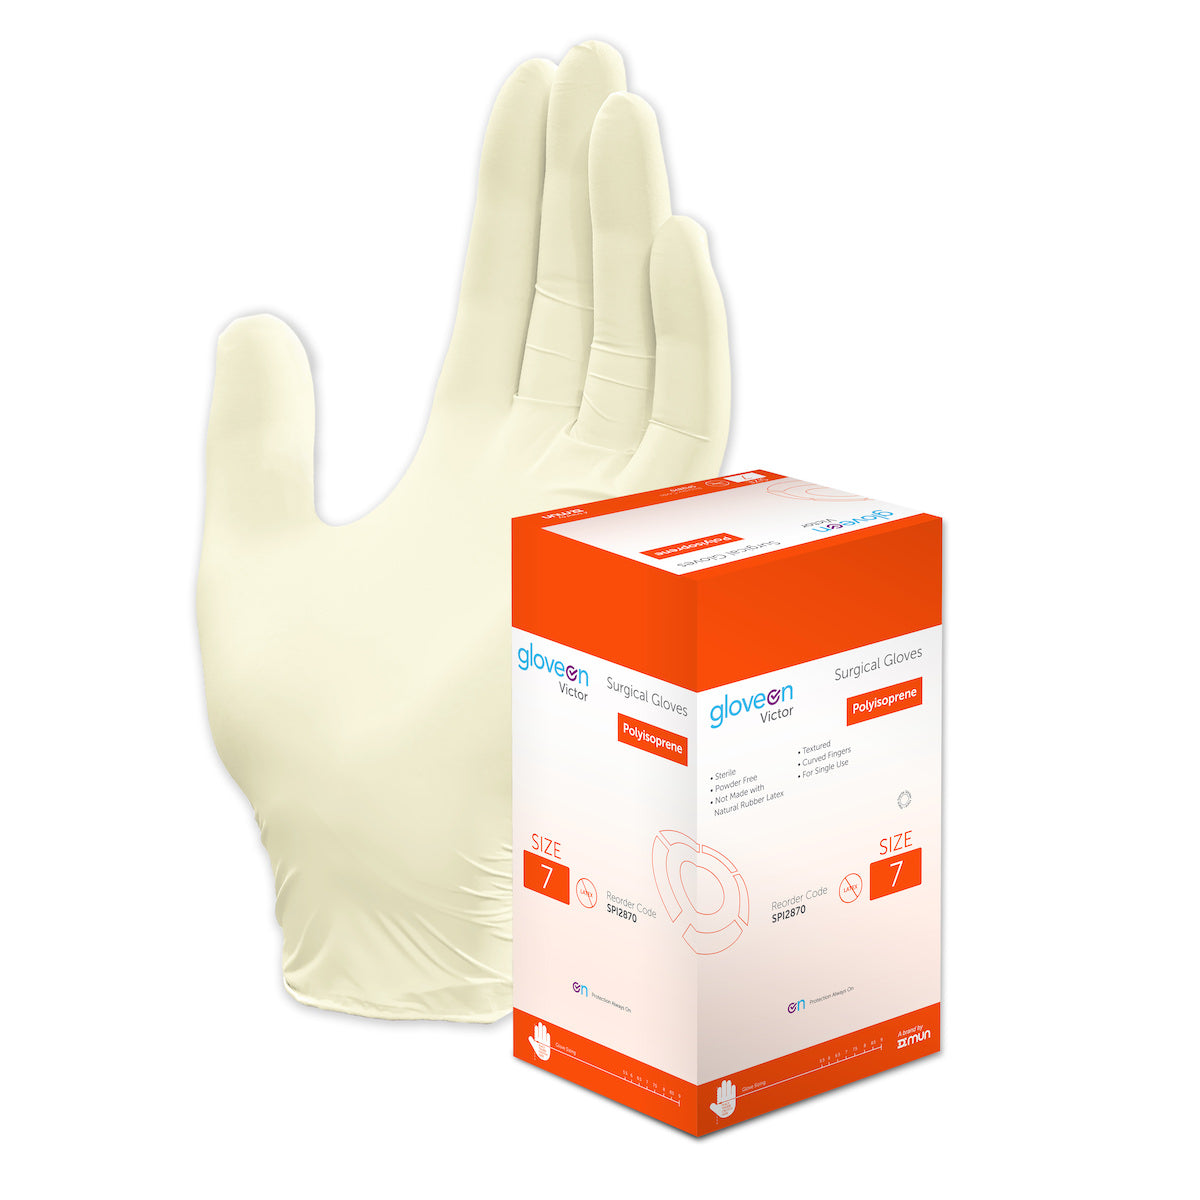 GloveOn® Victor Surgical Gloves SPI28 (Carton of 4 Boxes)